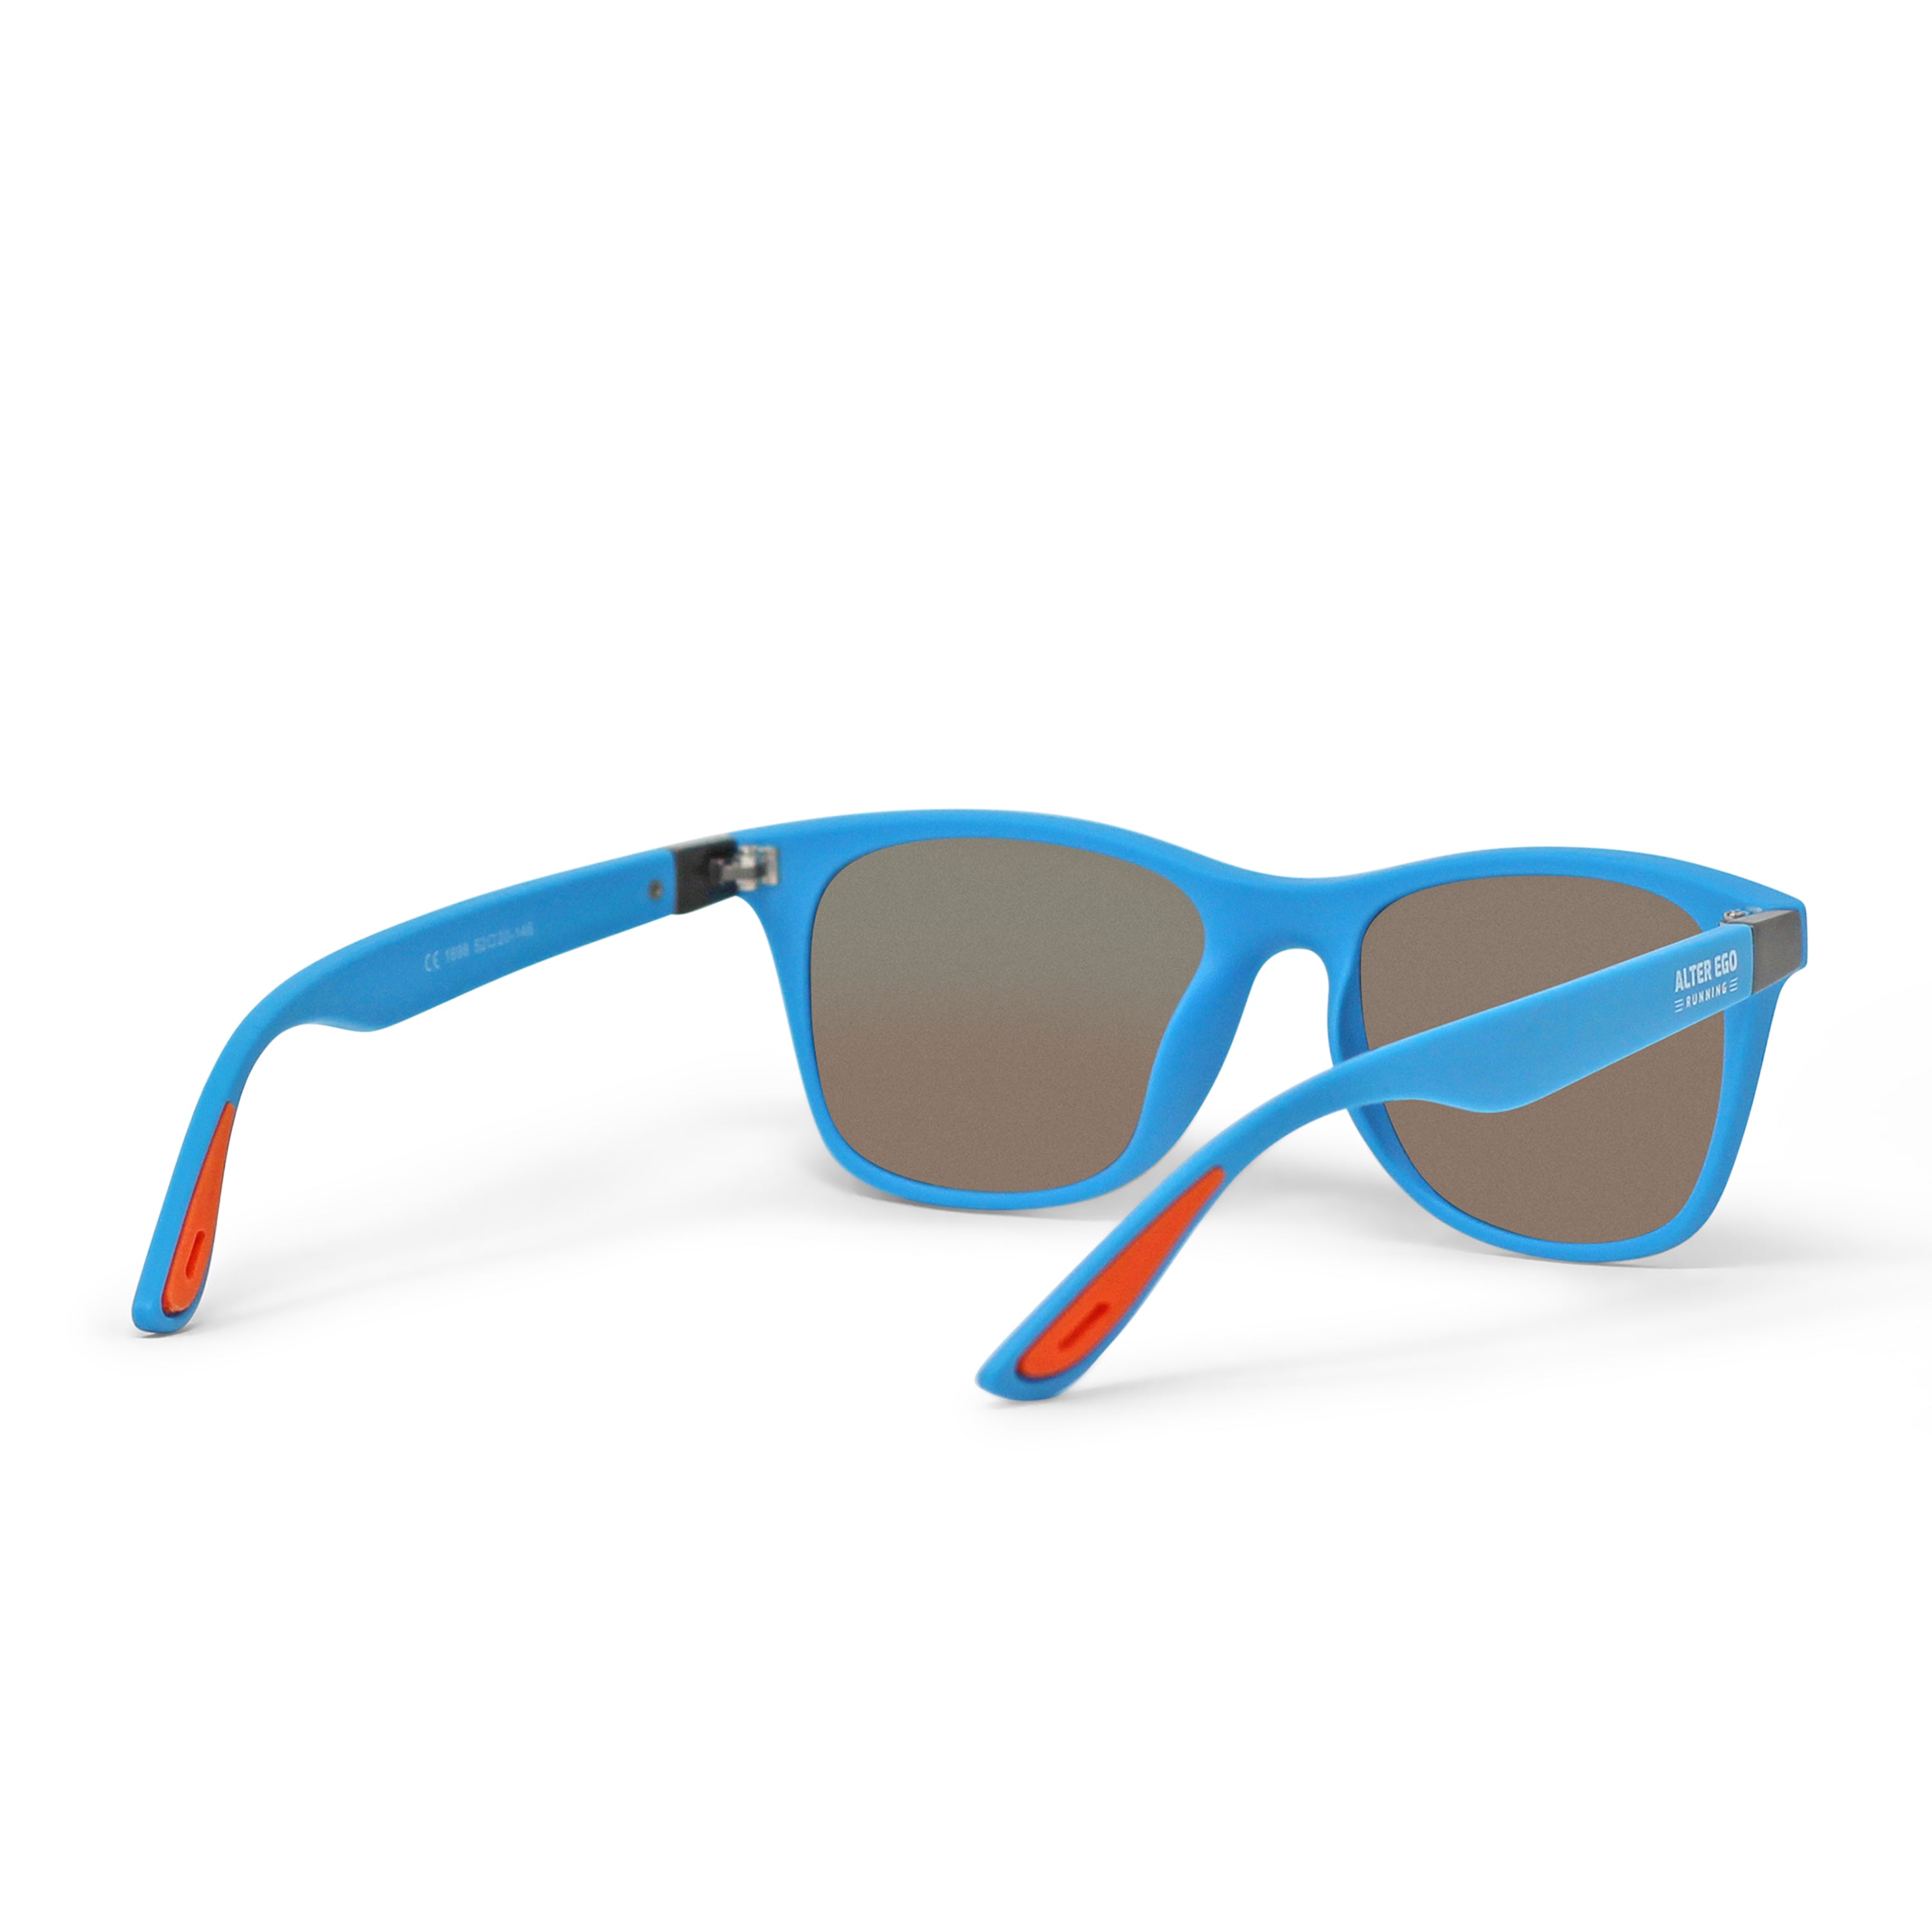 RUN Sunnies - Blue Frame | Blue Polarized Lenses | Orange Elements